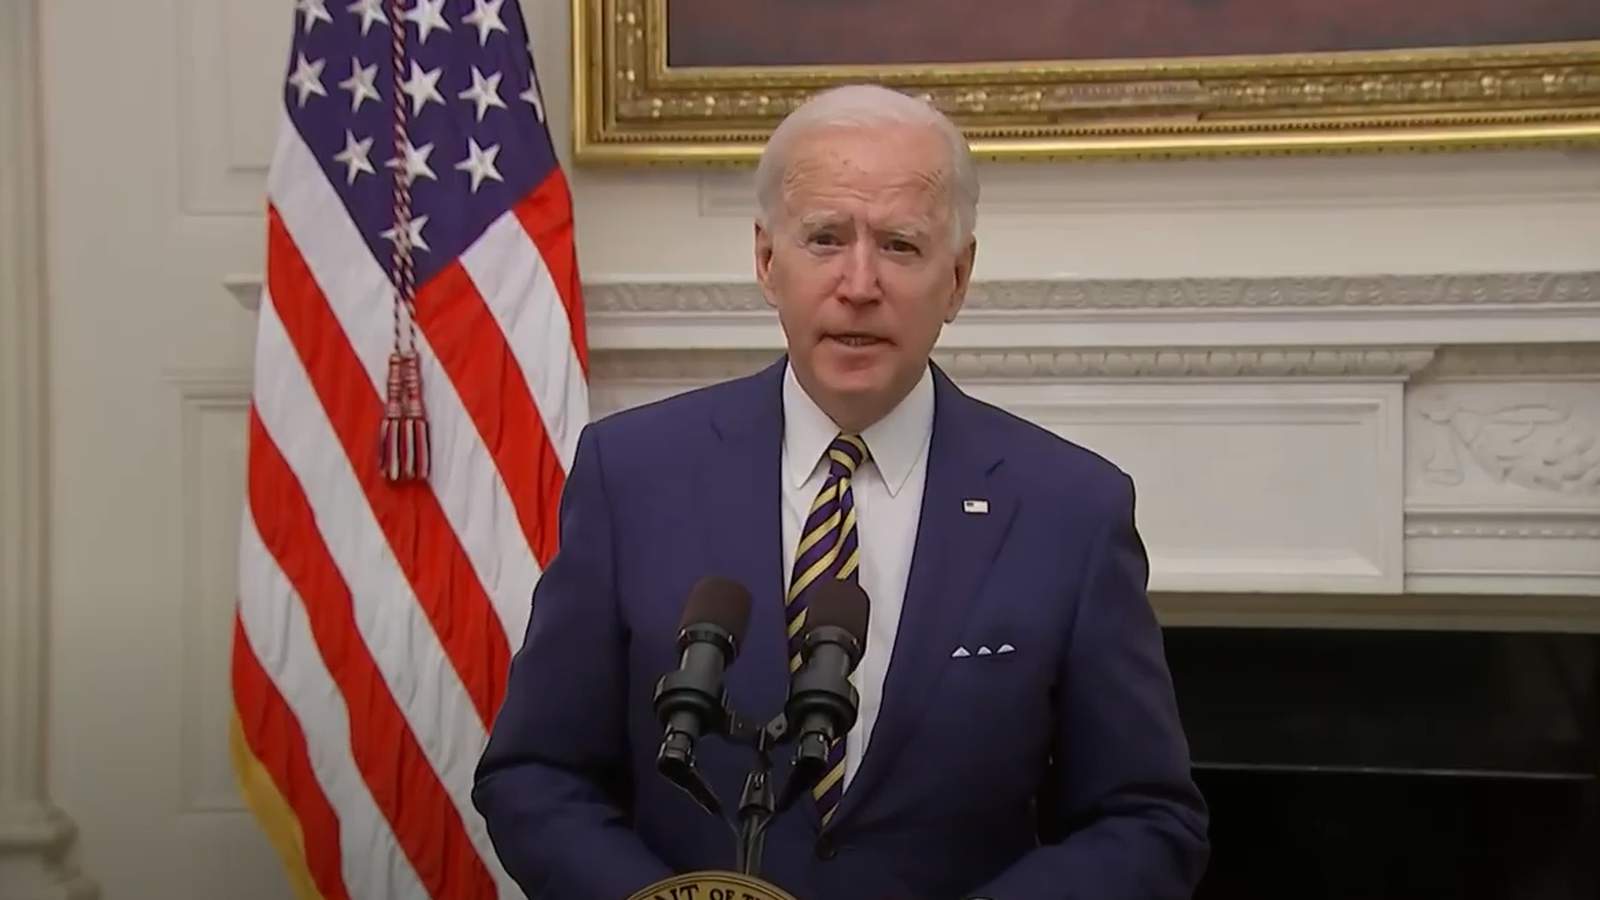 WATCH: President Joe Biden delivers remarks on U.S. economy